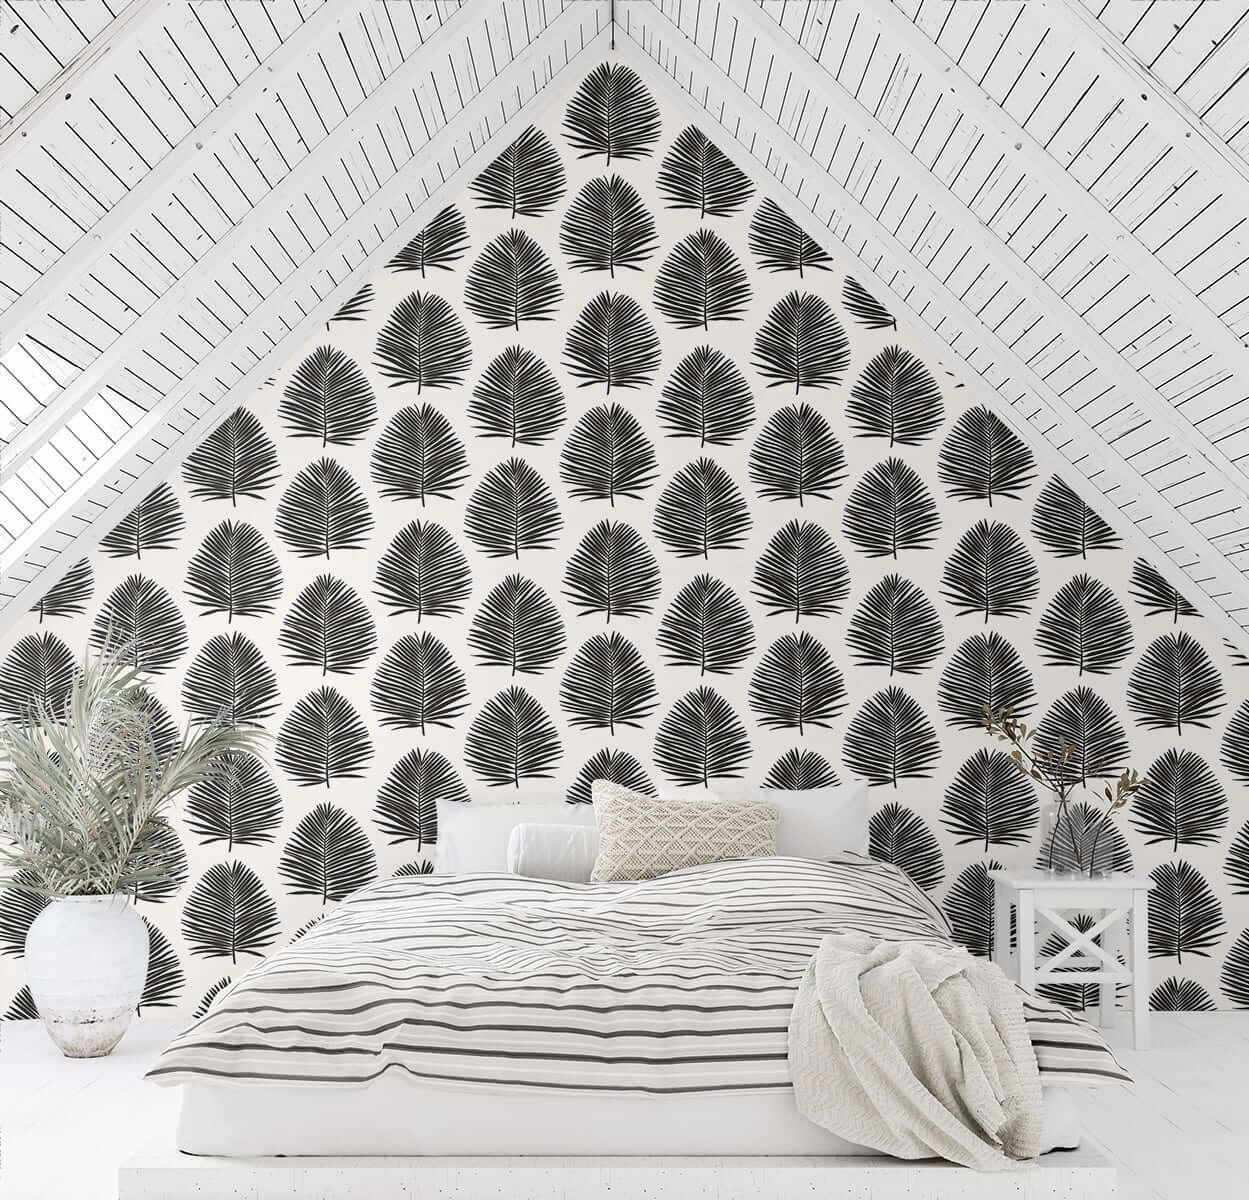 Seabrook Designs The Simple Life Island Palm Wallpaper - Black & White